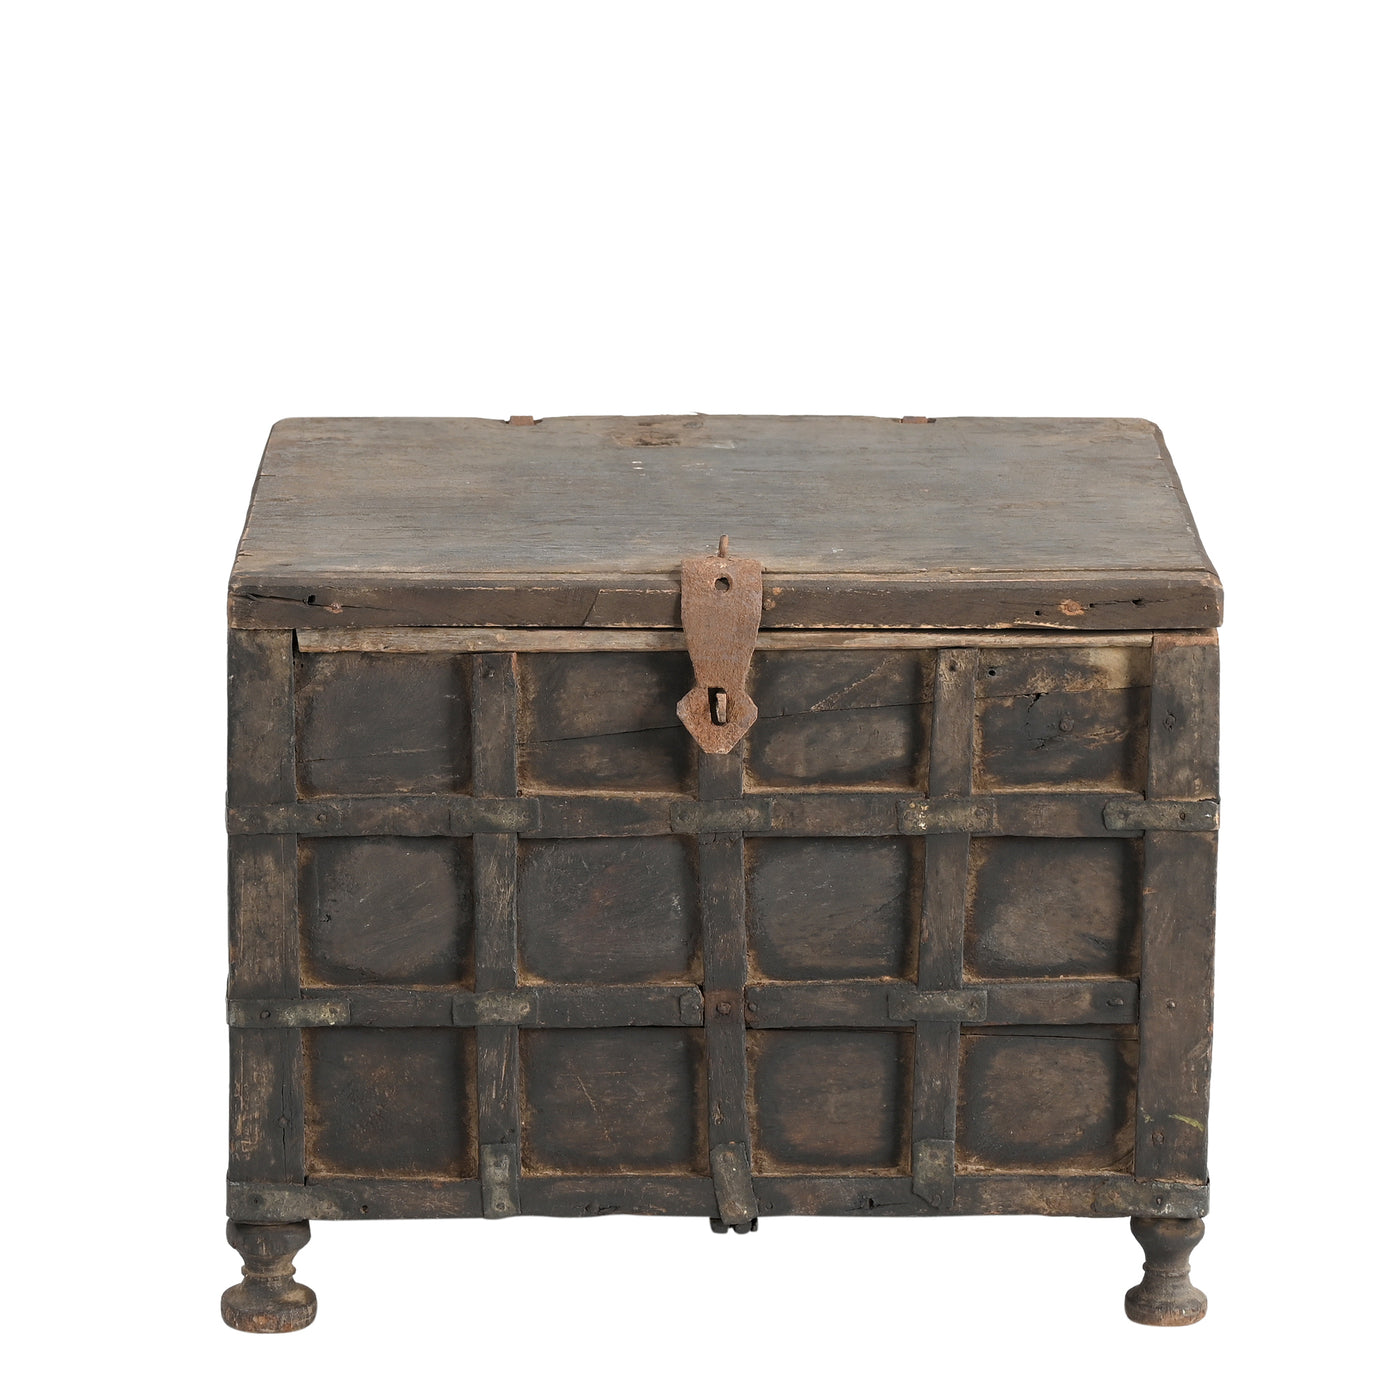 Mahuva - Wooden chest